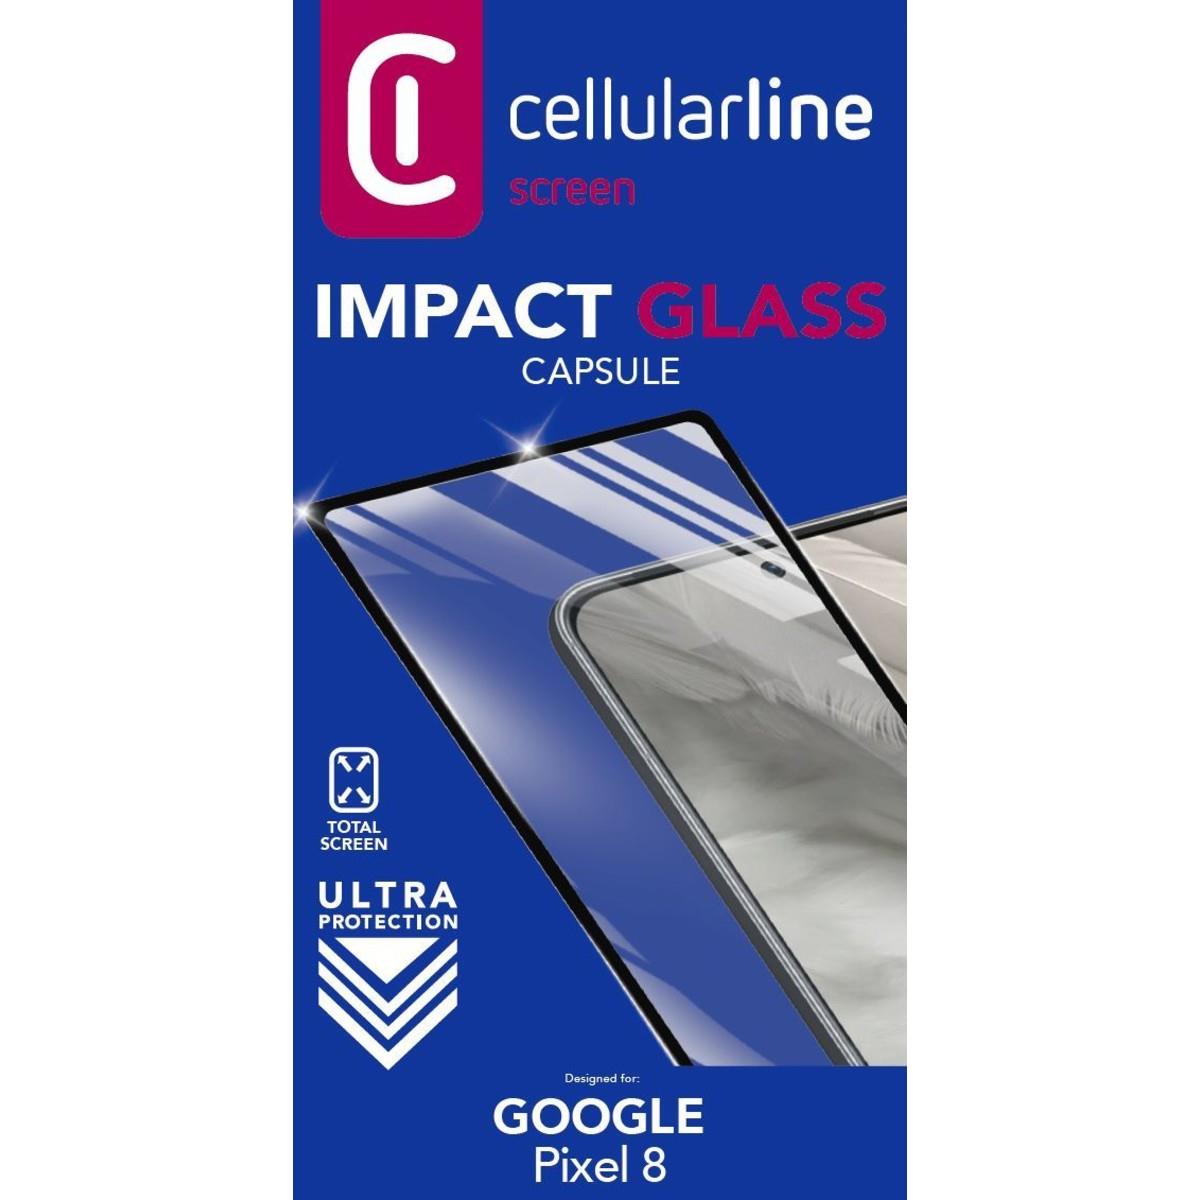 Schutzglas IMPACT GLASS CAPSULE für Google Pixel 8